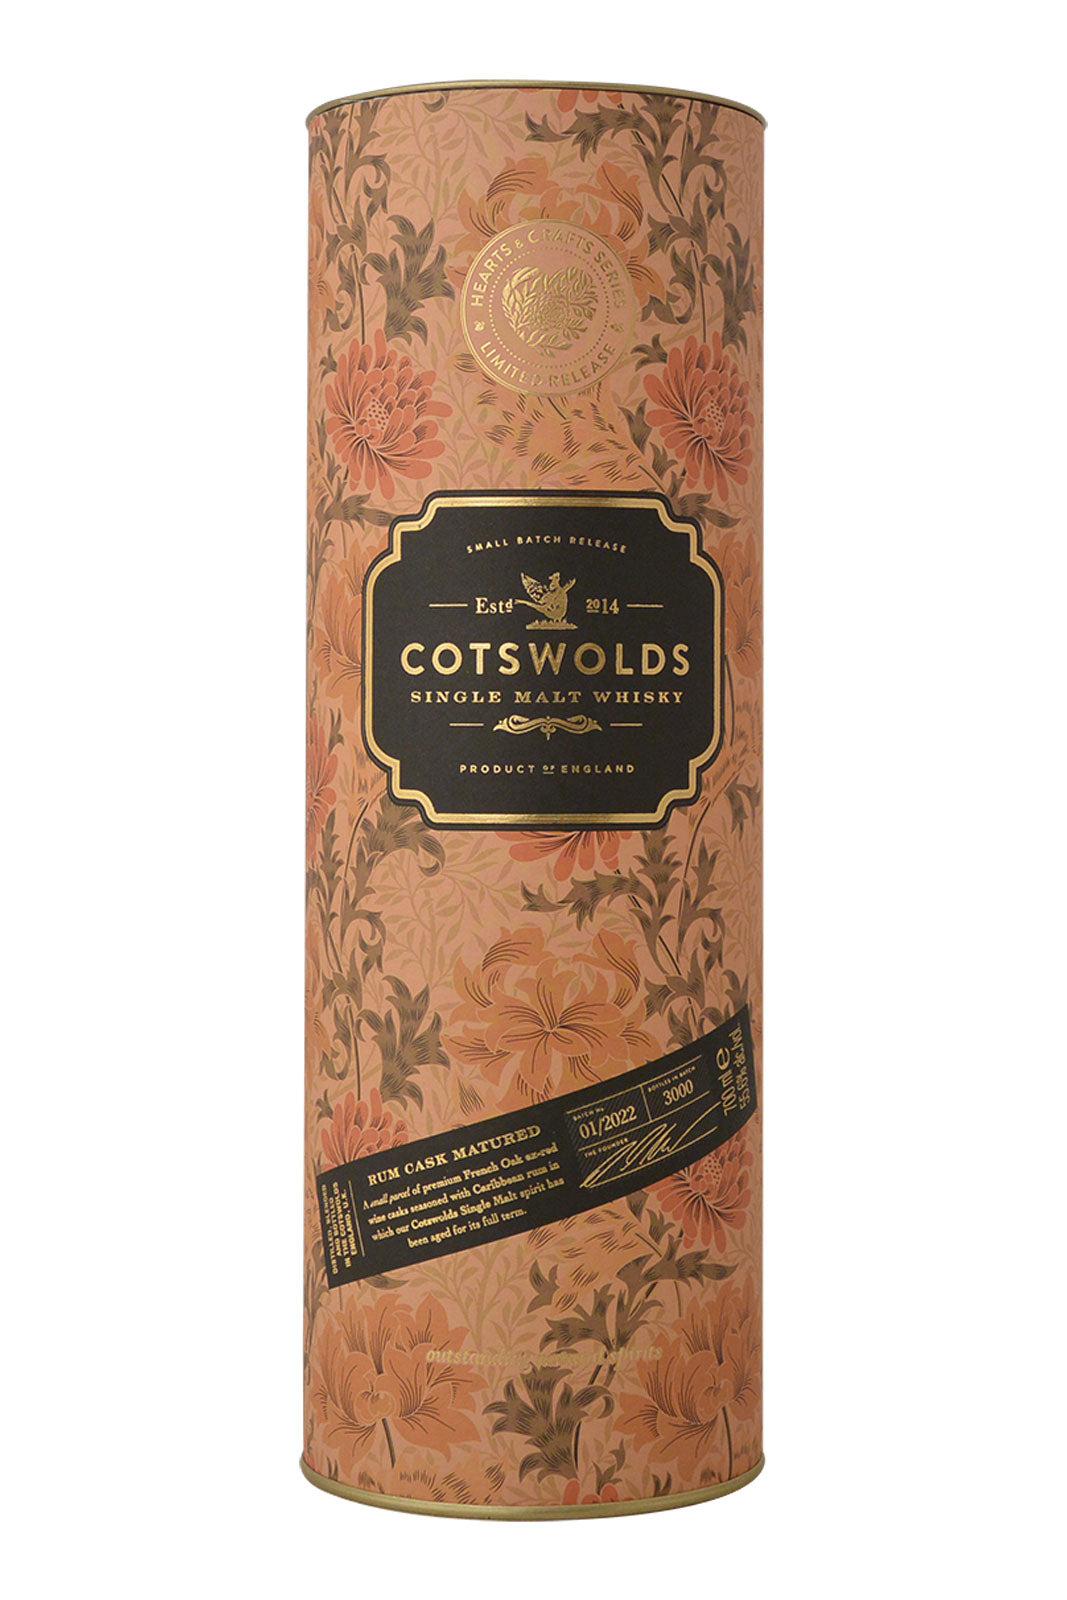 Cotswolds Hearts & Crafts Rum Cask Single Malt Whisky